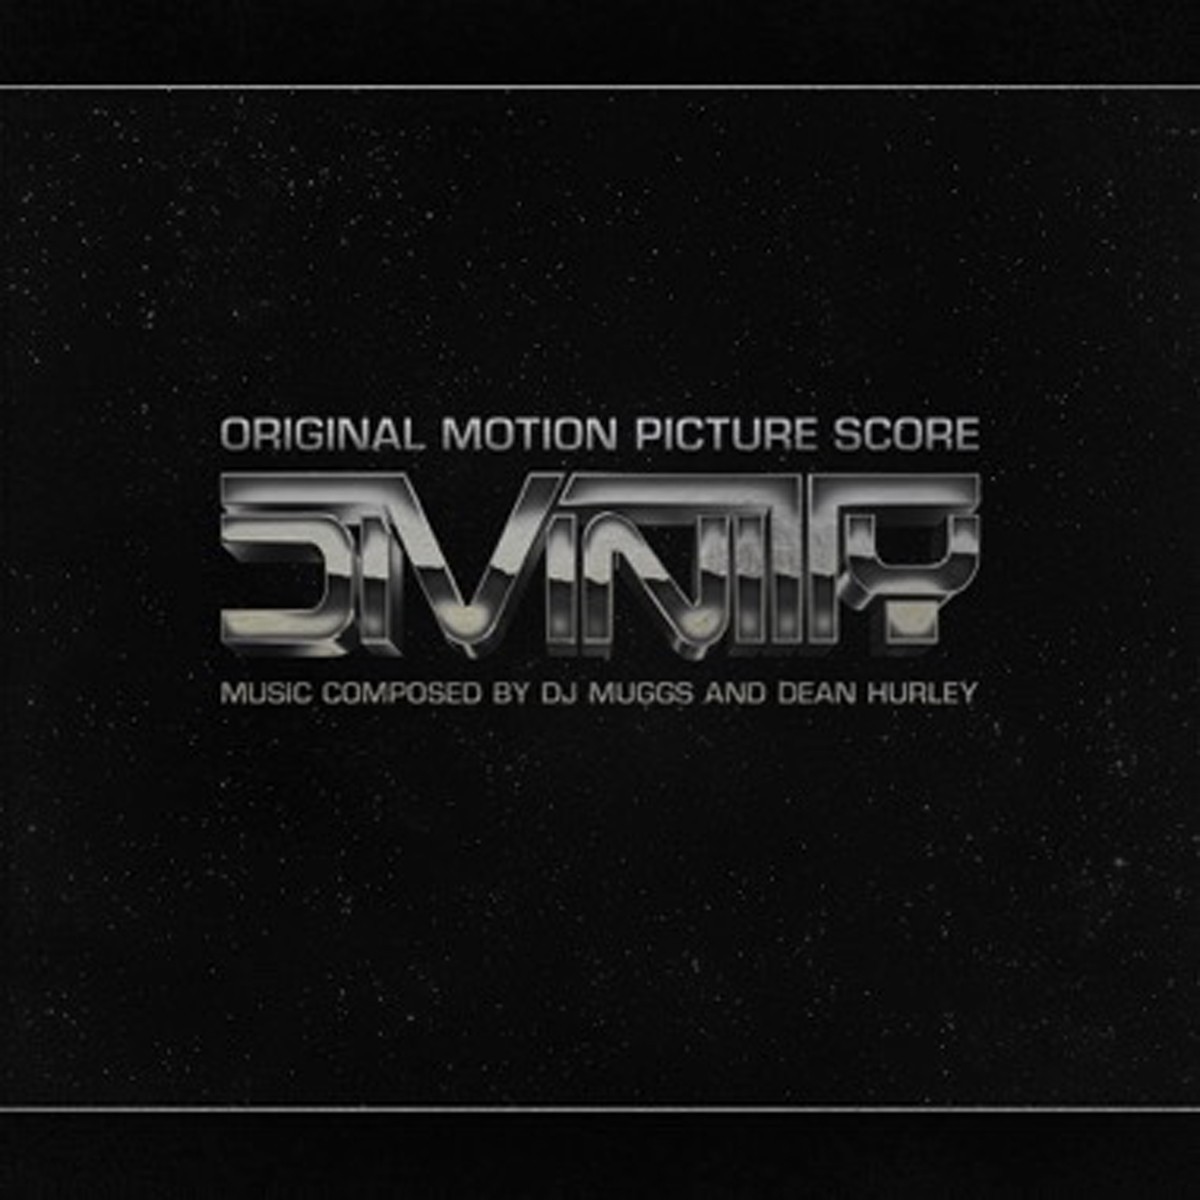 DJ Muggs & Dean Hurley - Divinity: Original Motion Picture Score